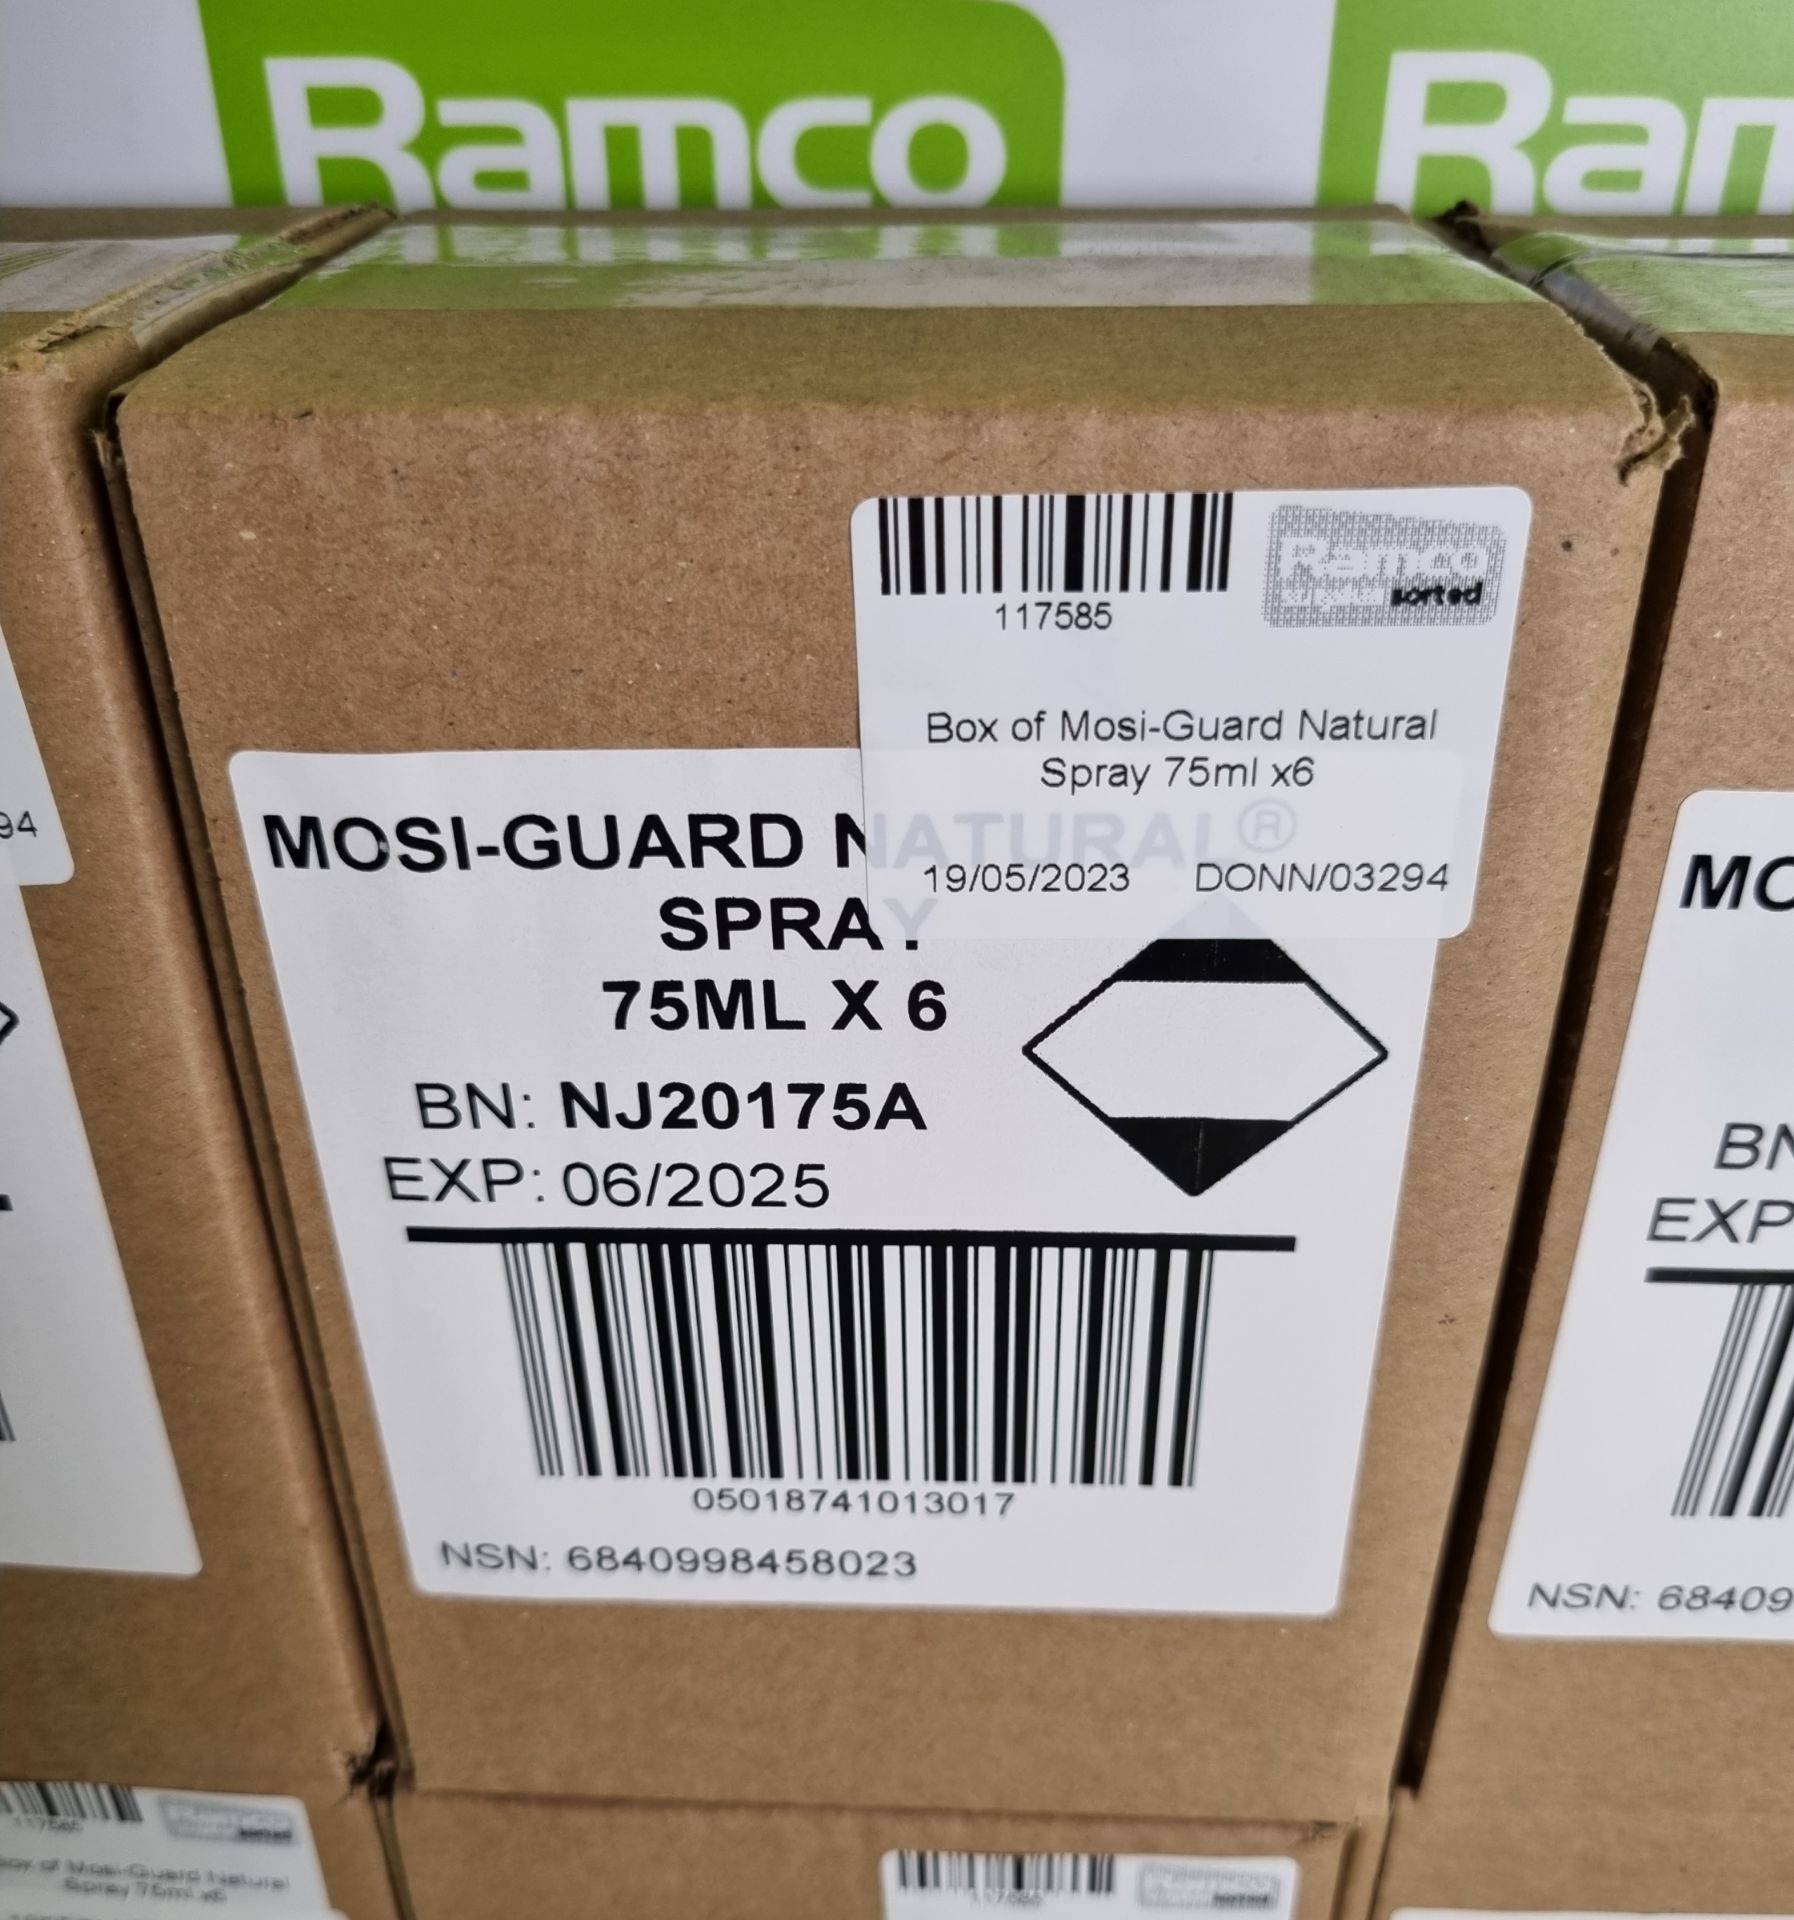 6x boxes of Mosi-Guard Natural Spray 75ml - 6 bottles per box - Image 2 of 5